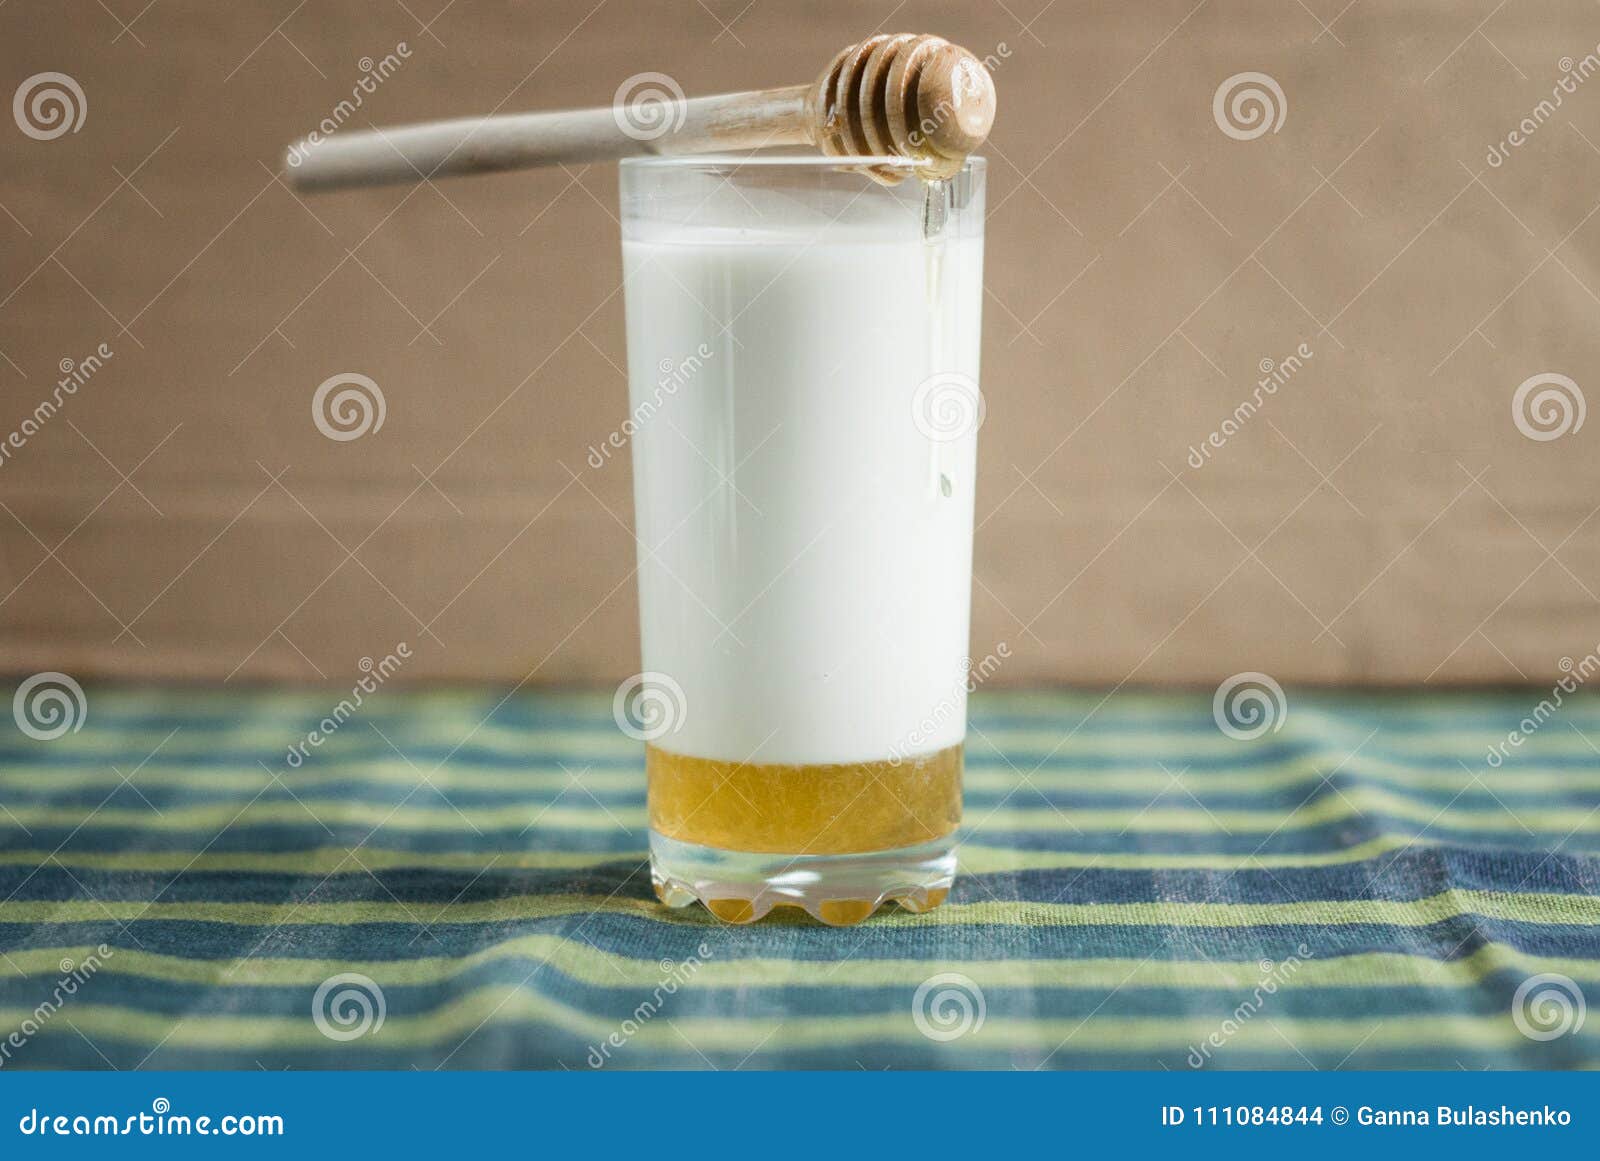 Kalmerend Veilig kin Een Glas Melk Met Honing En Houten Lepel Stock Foto - Image of kleverig,  preventie: 111084844